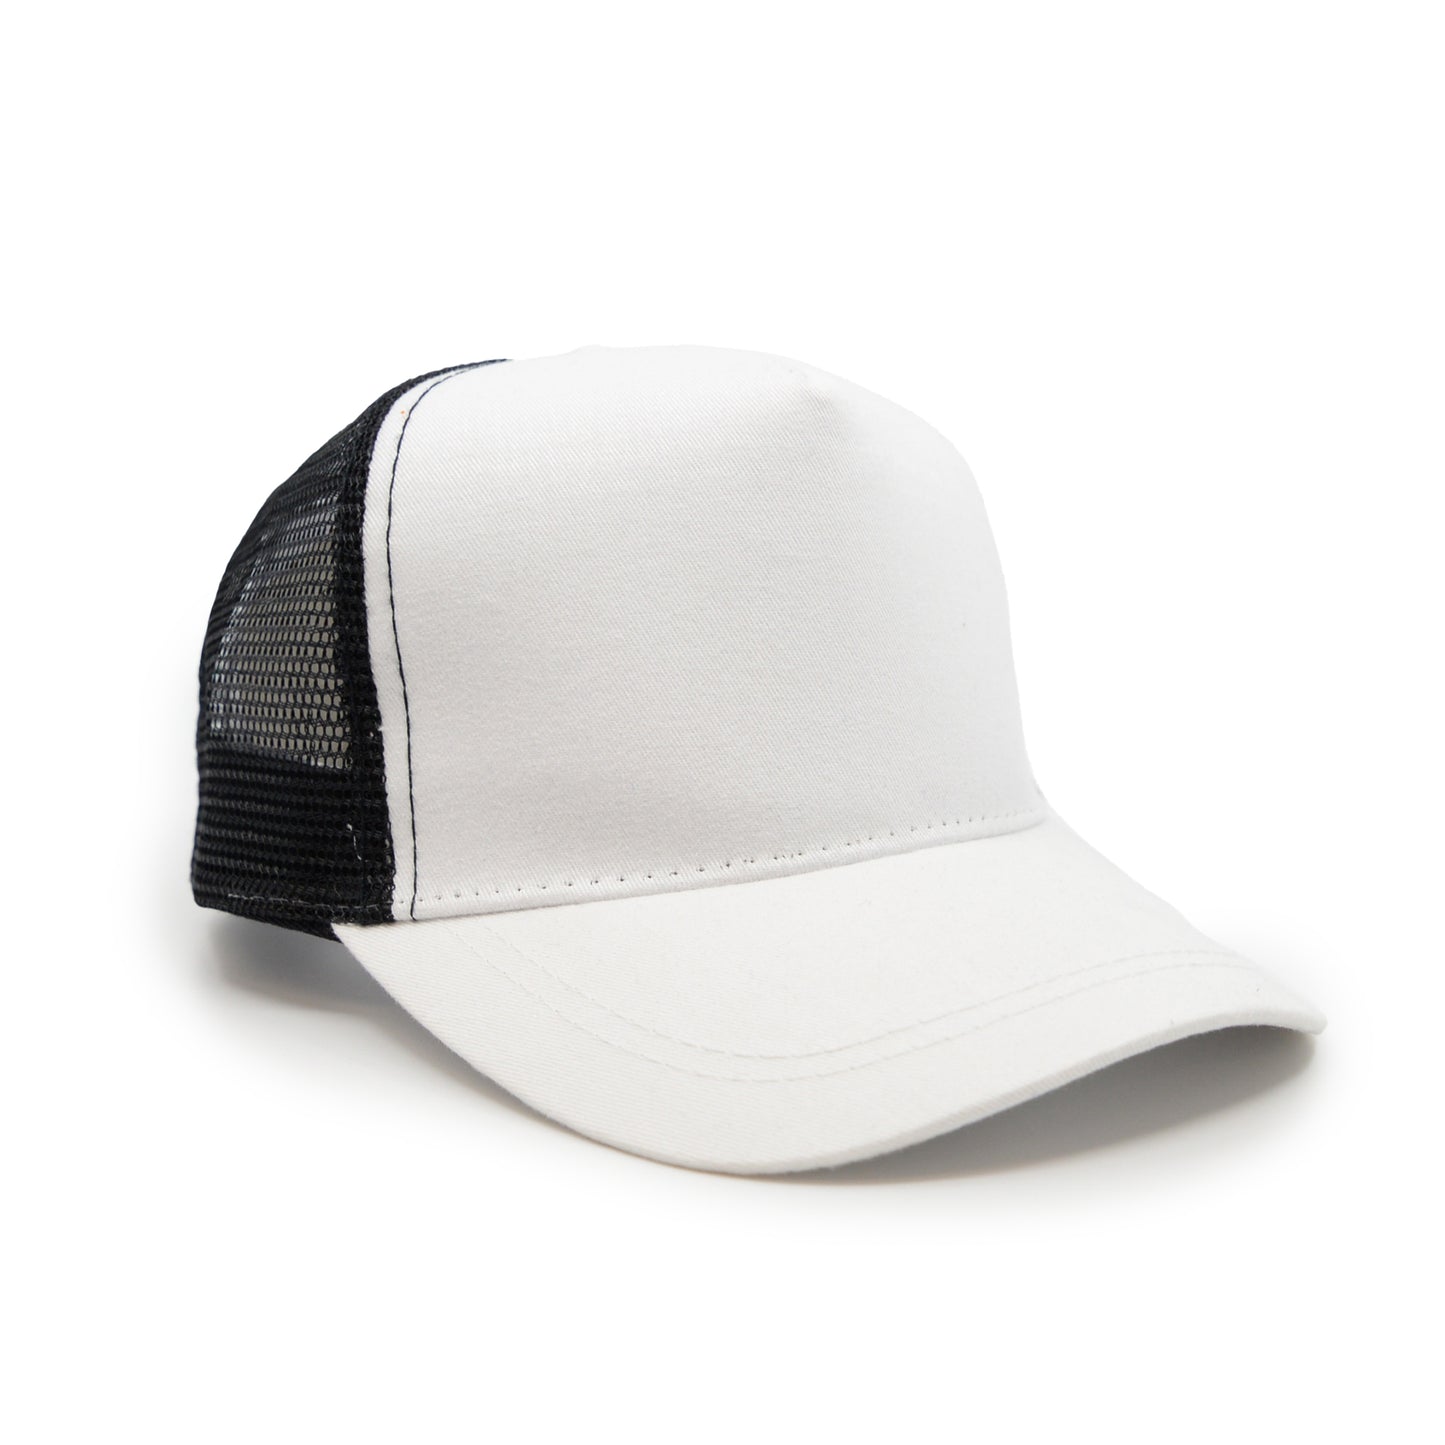 Baseball Cap - Design Your Own